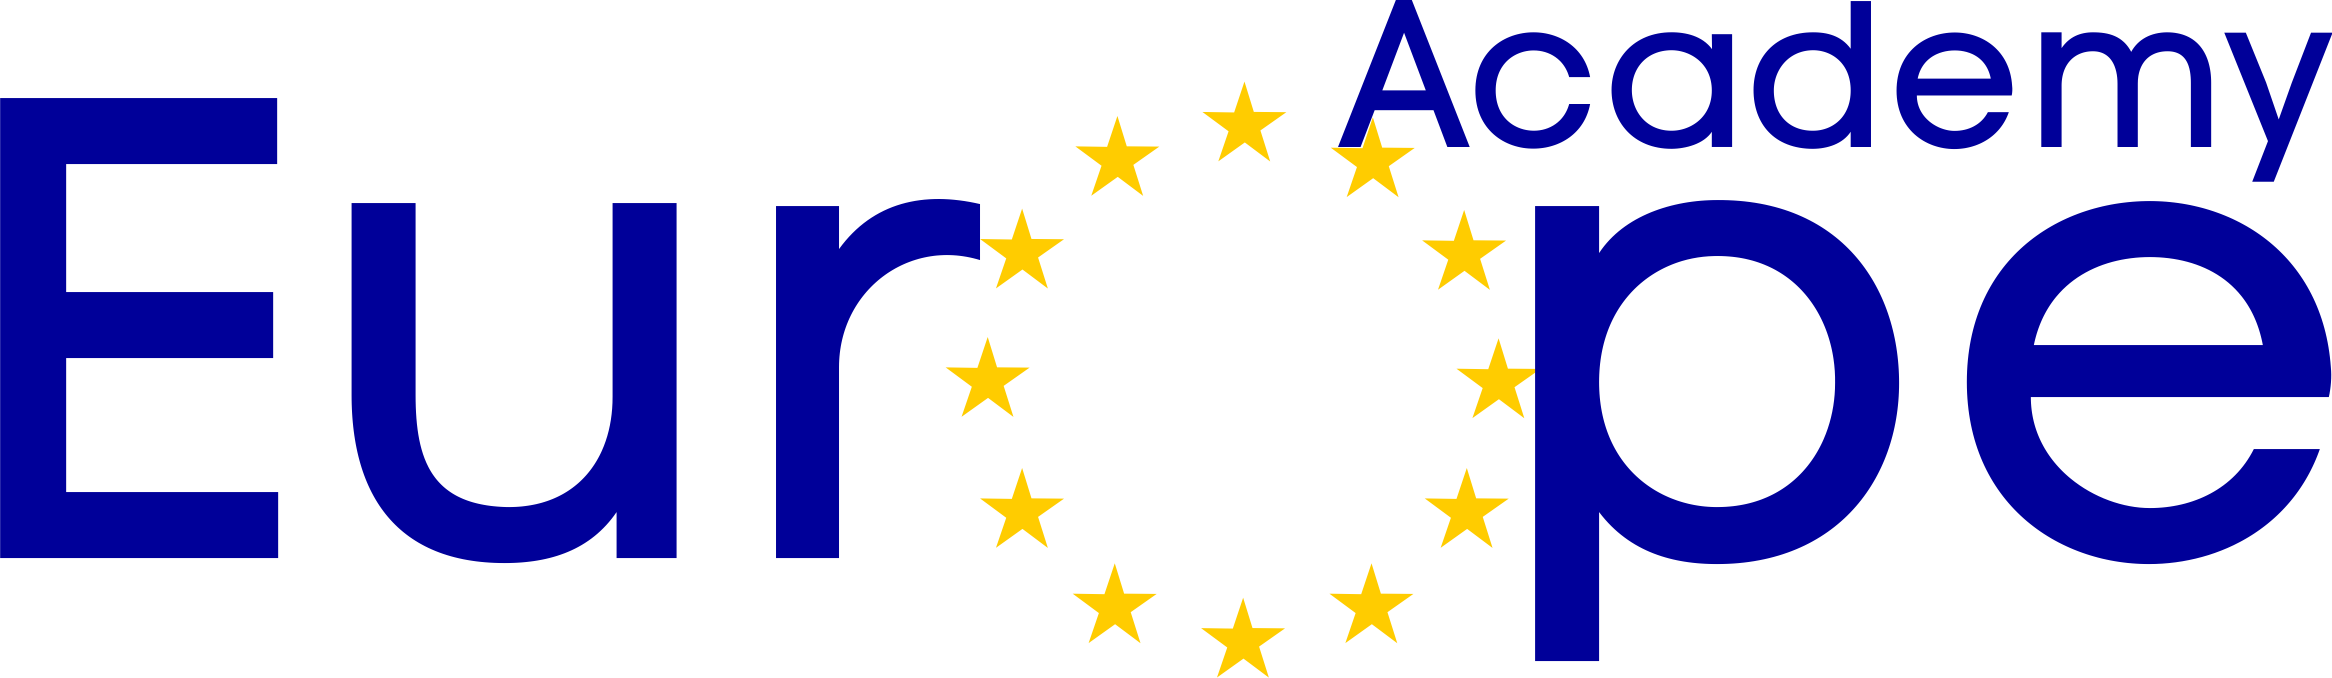 Academy Europe | European Open University